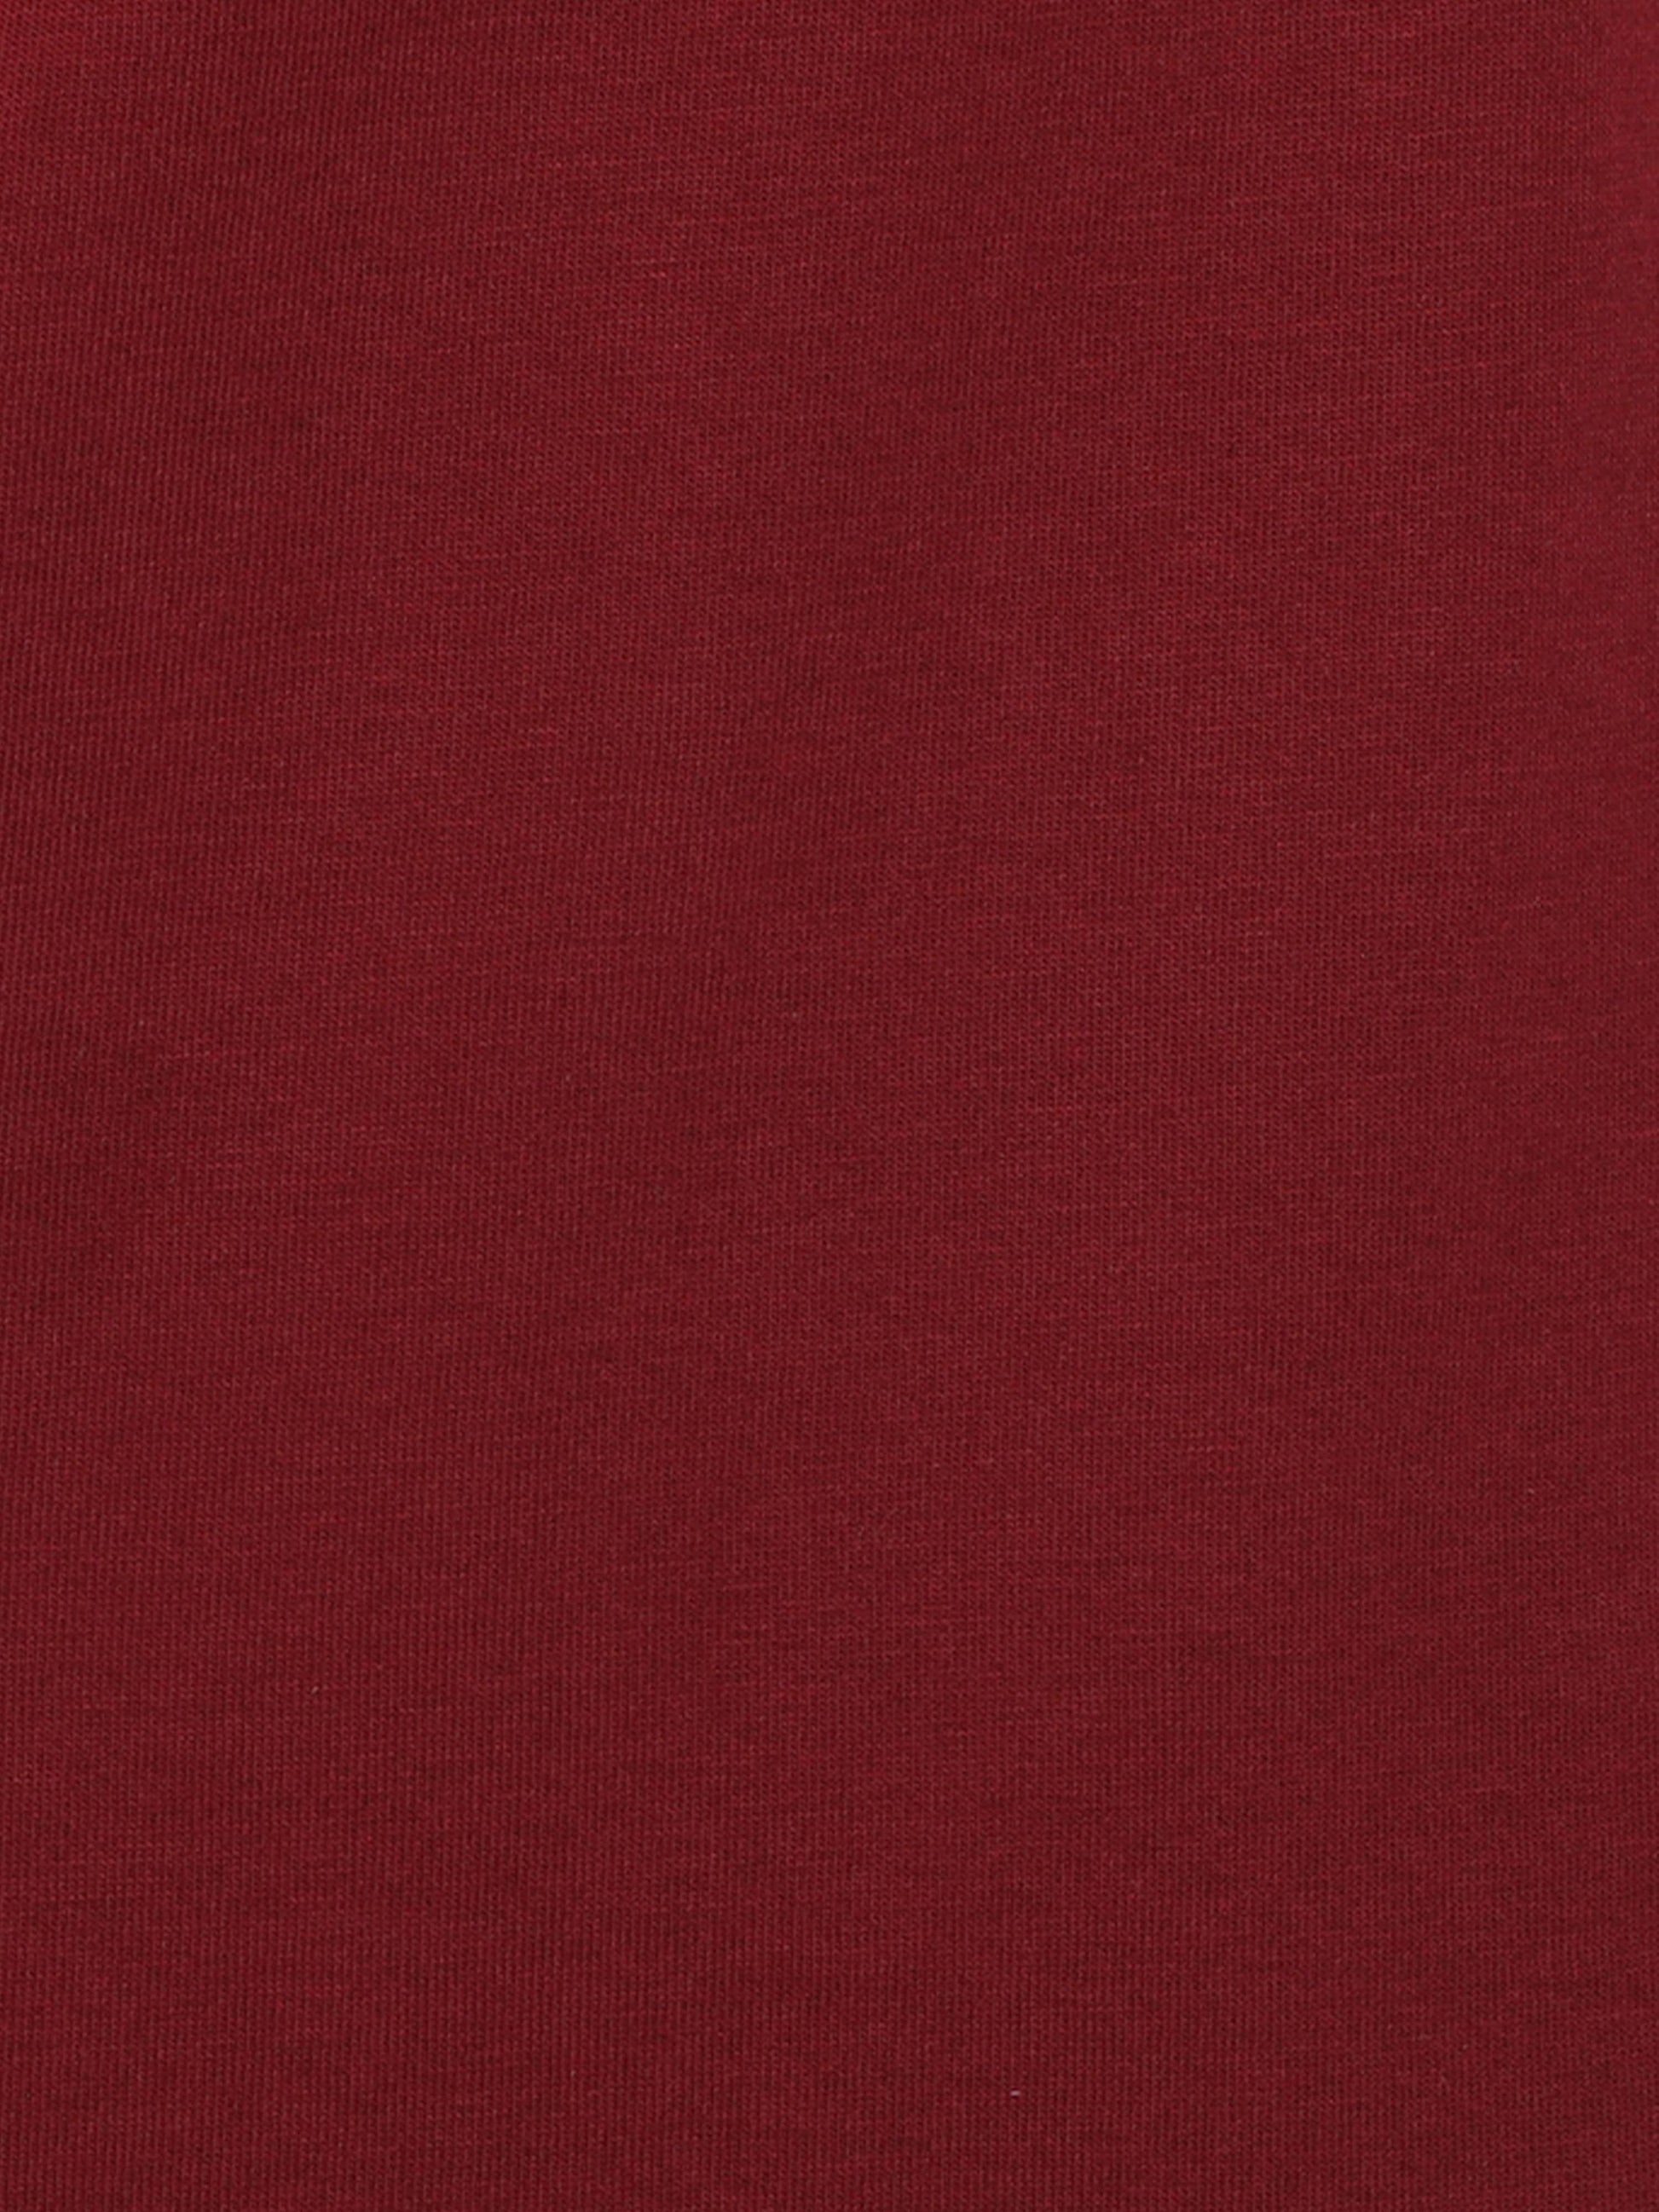 Garnet Red Printed T-Shirt CWTP-17011